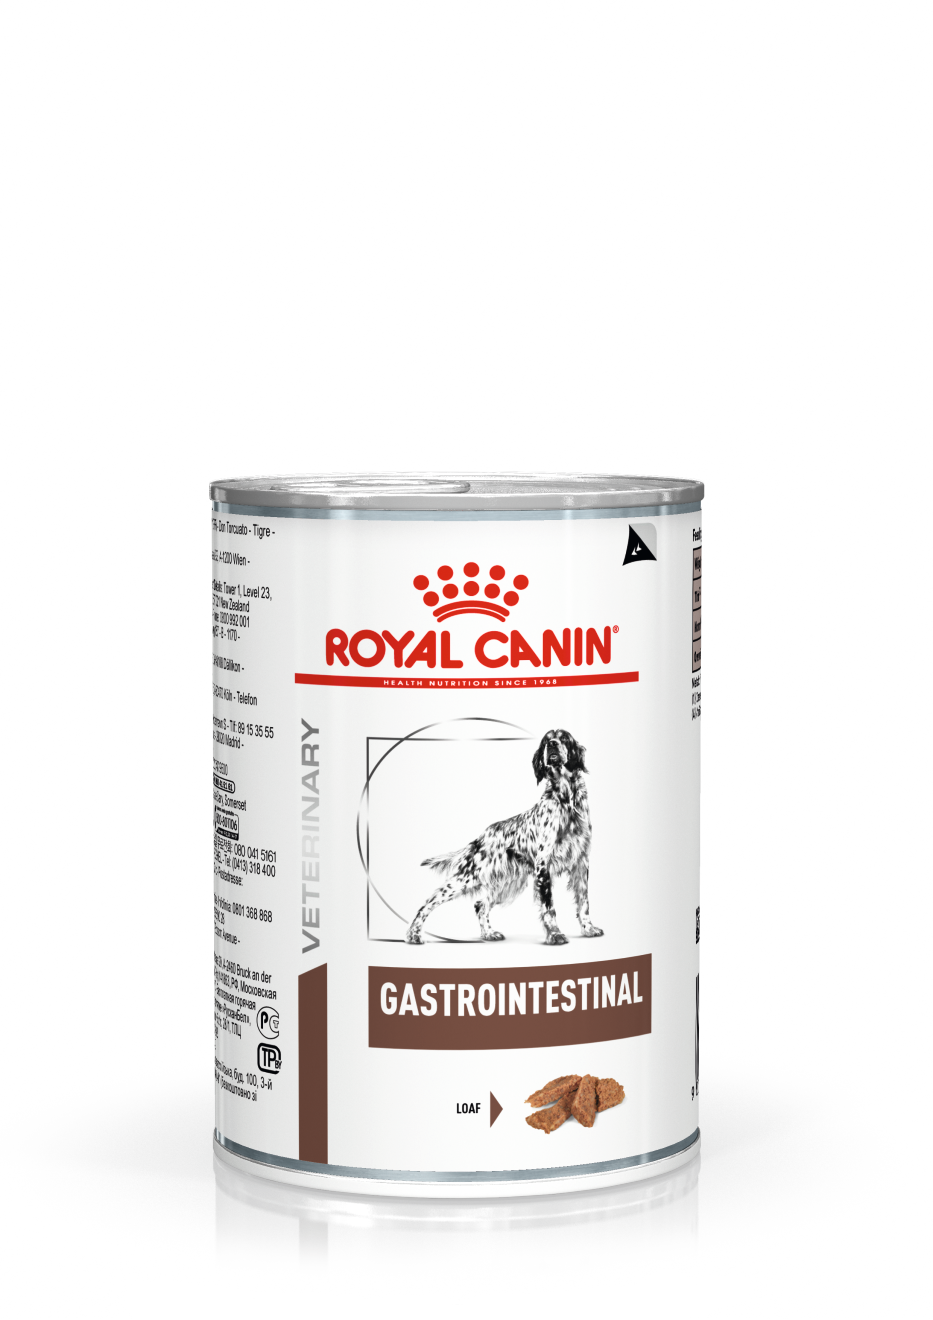 Royal Canin Gastro Intestinal hond 24 x 400g